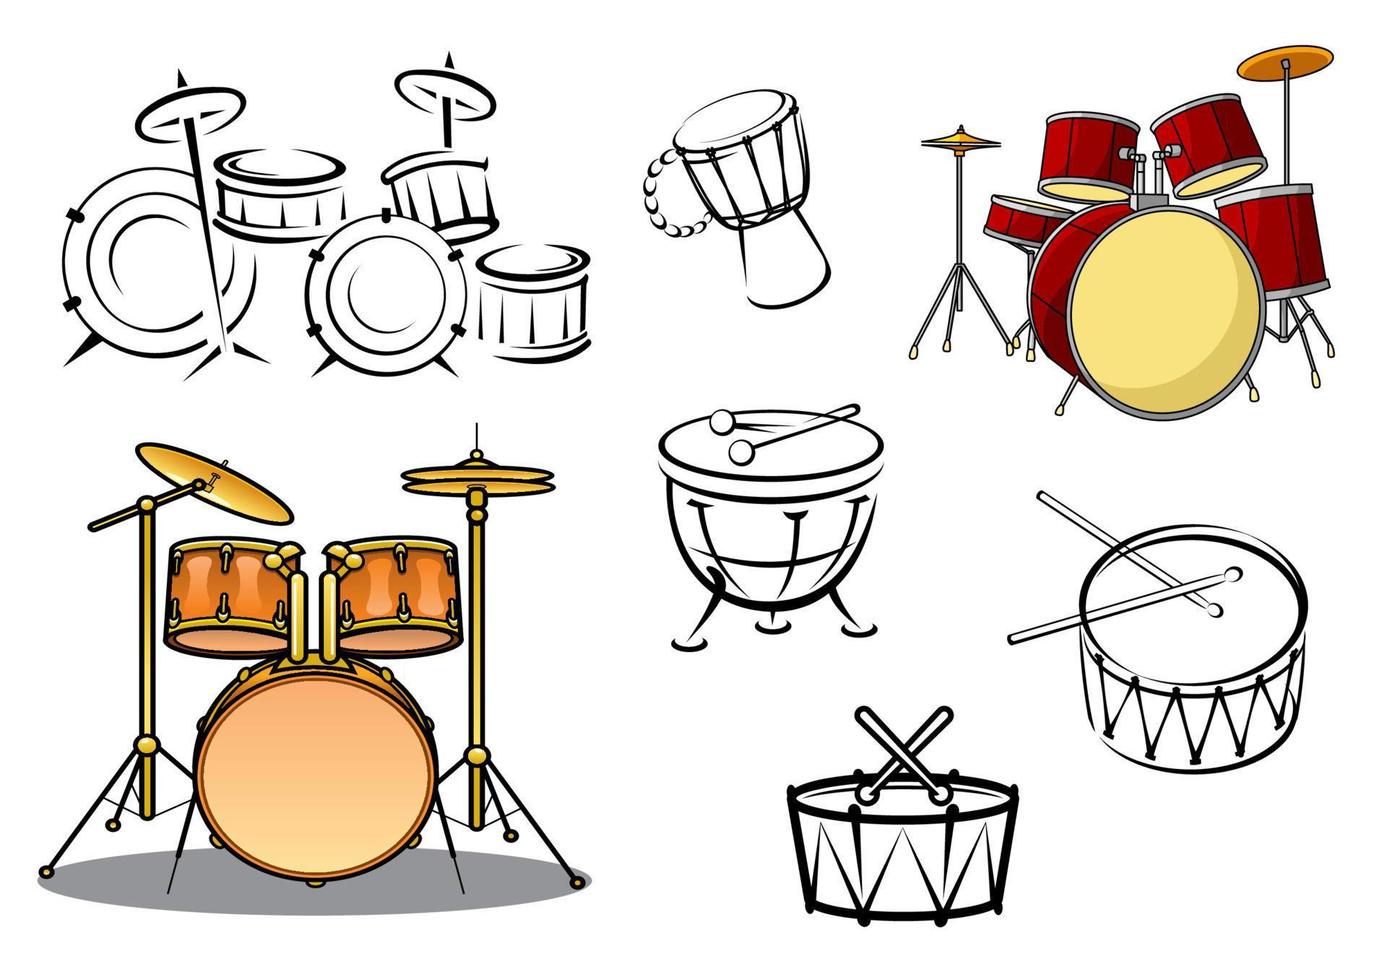 icônes d'instruments à percussion vecteur